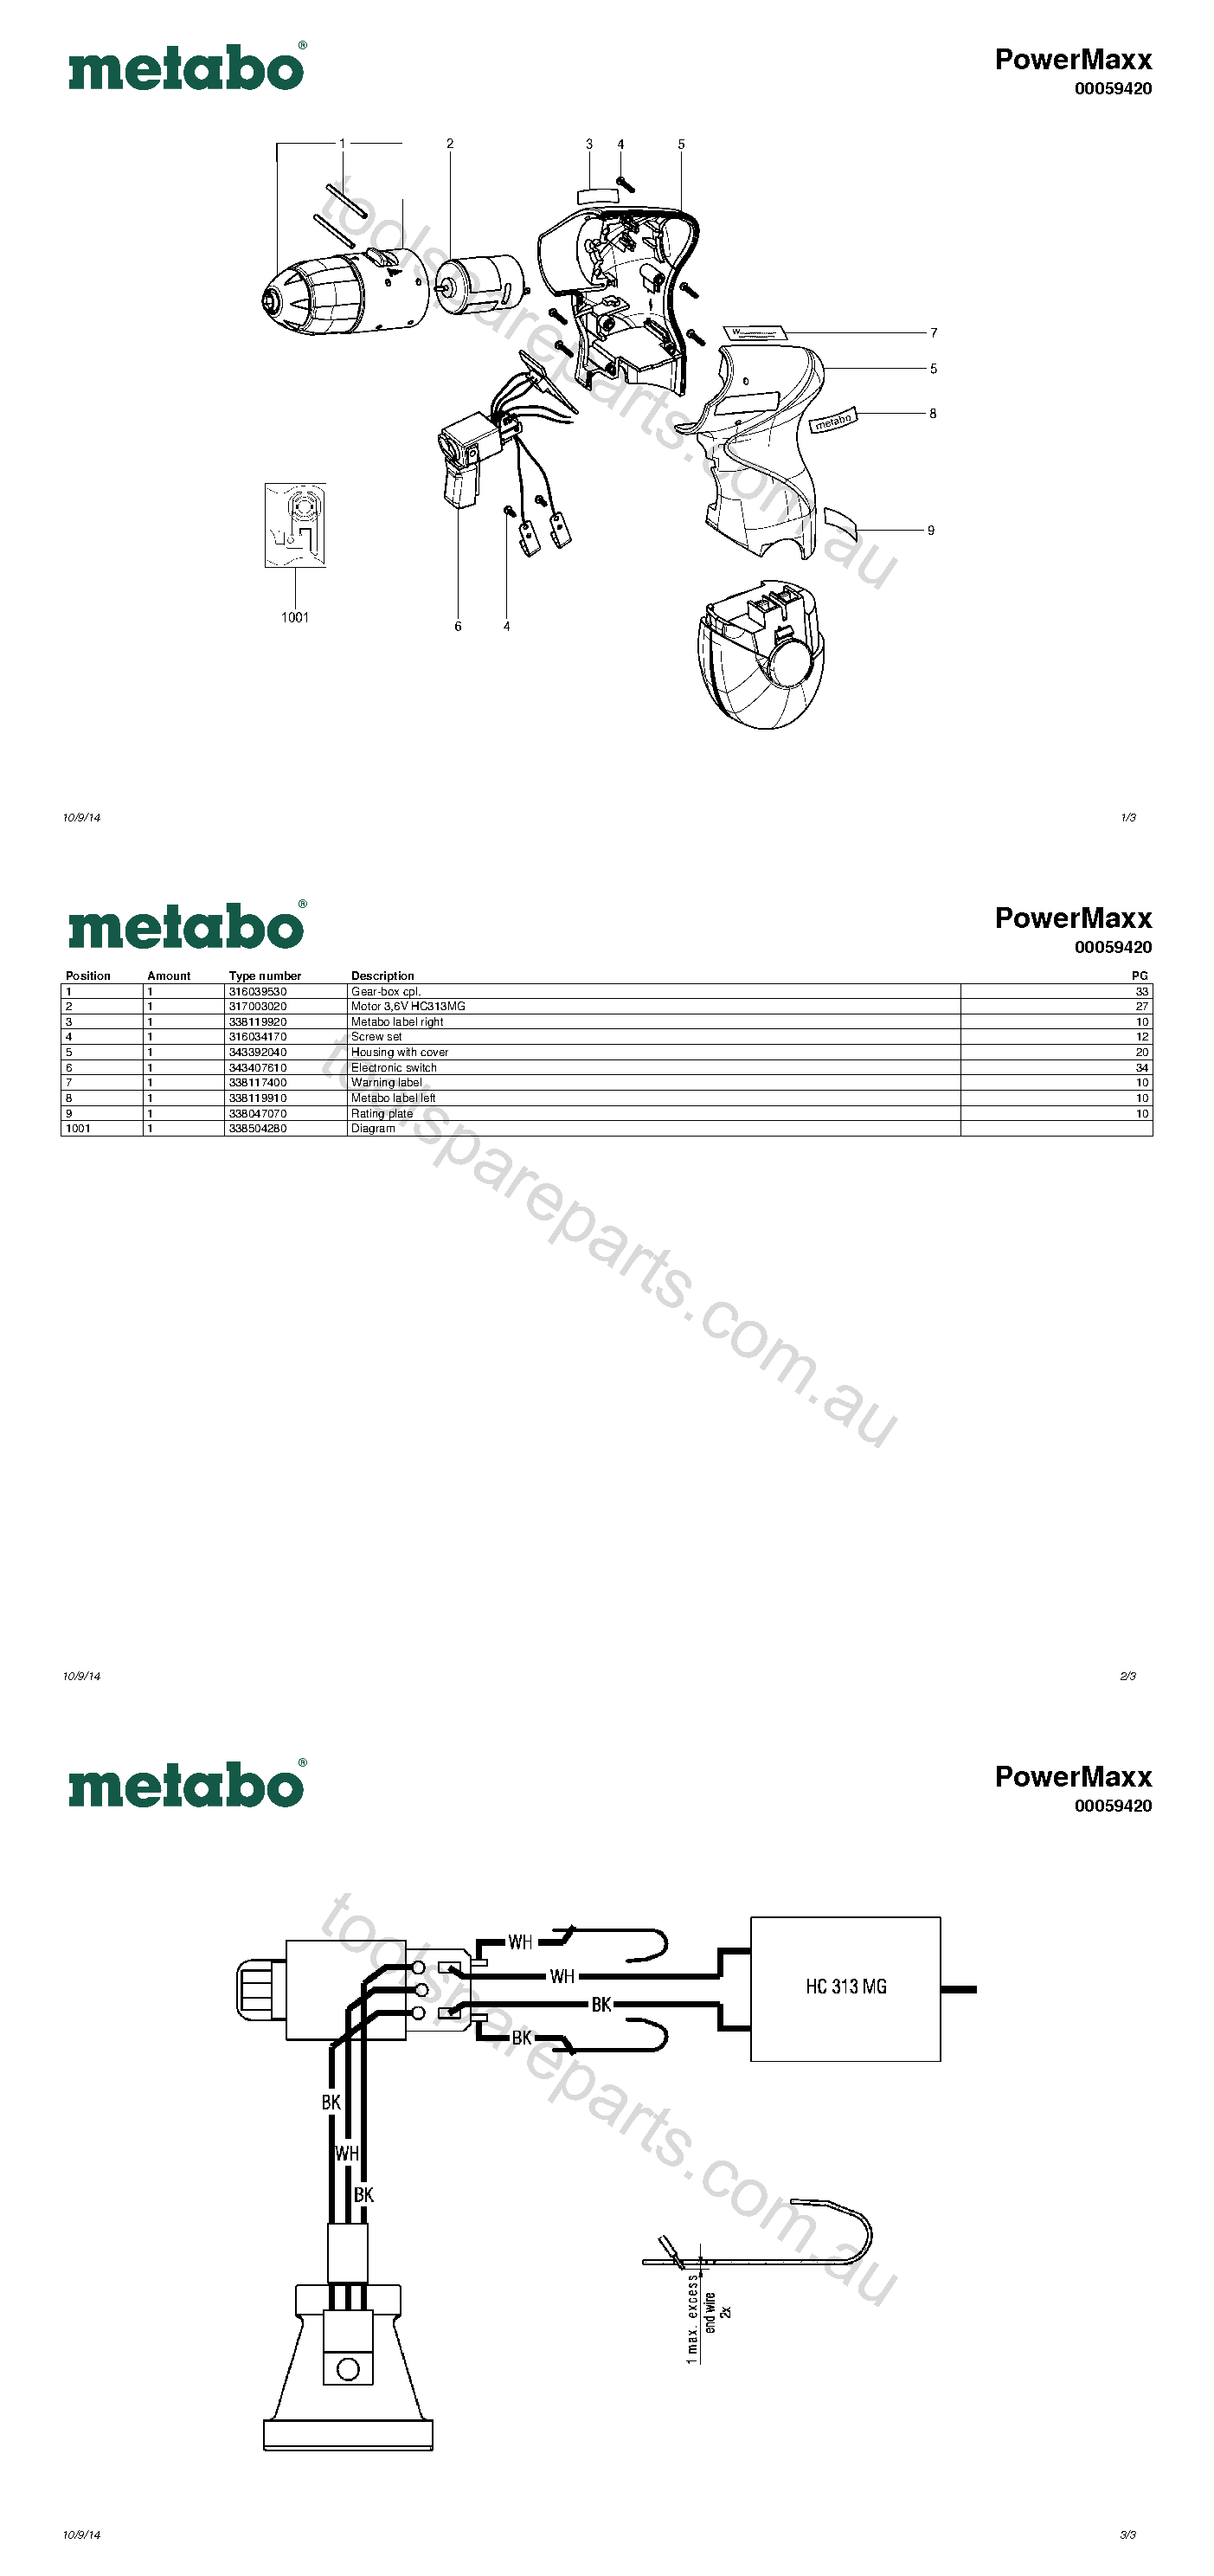 Metabo PowerMaxx 00059420  Diagram 1